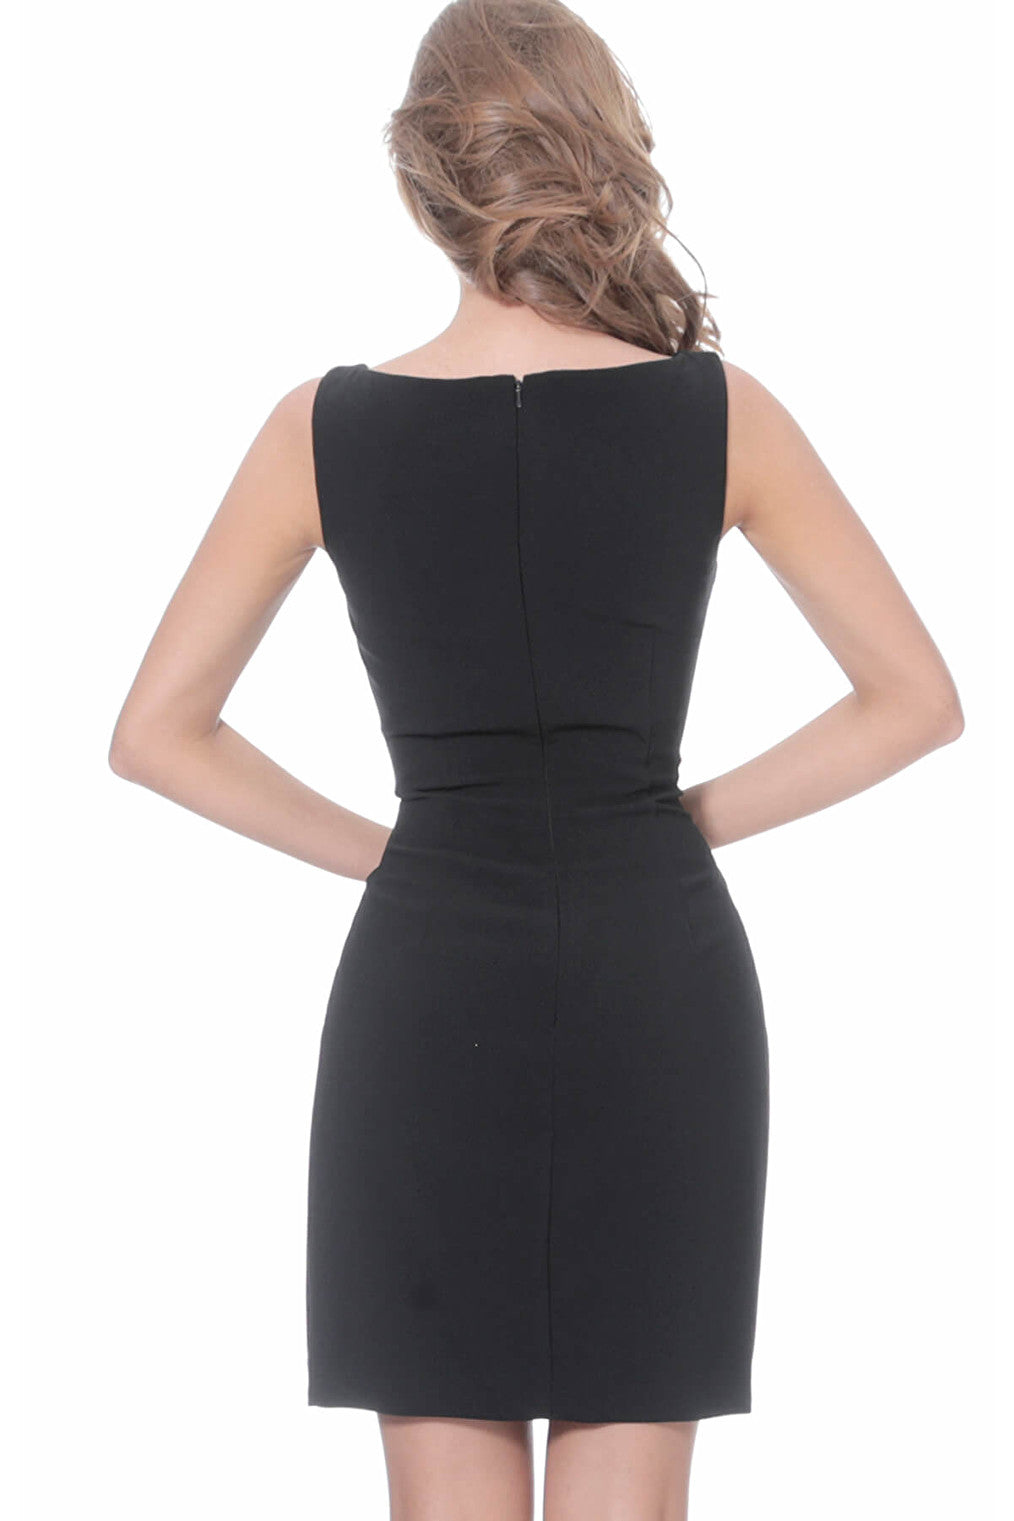 short black dress 3551